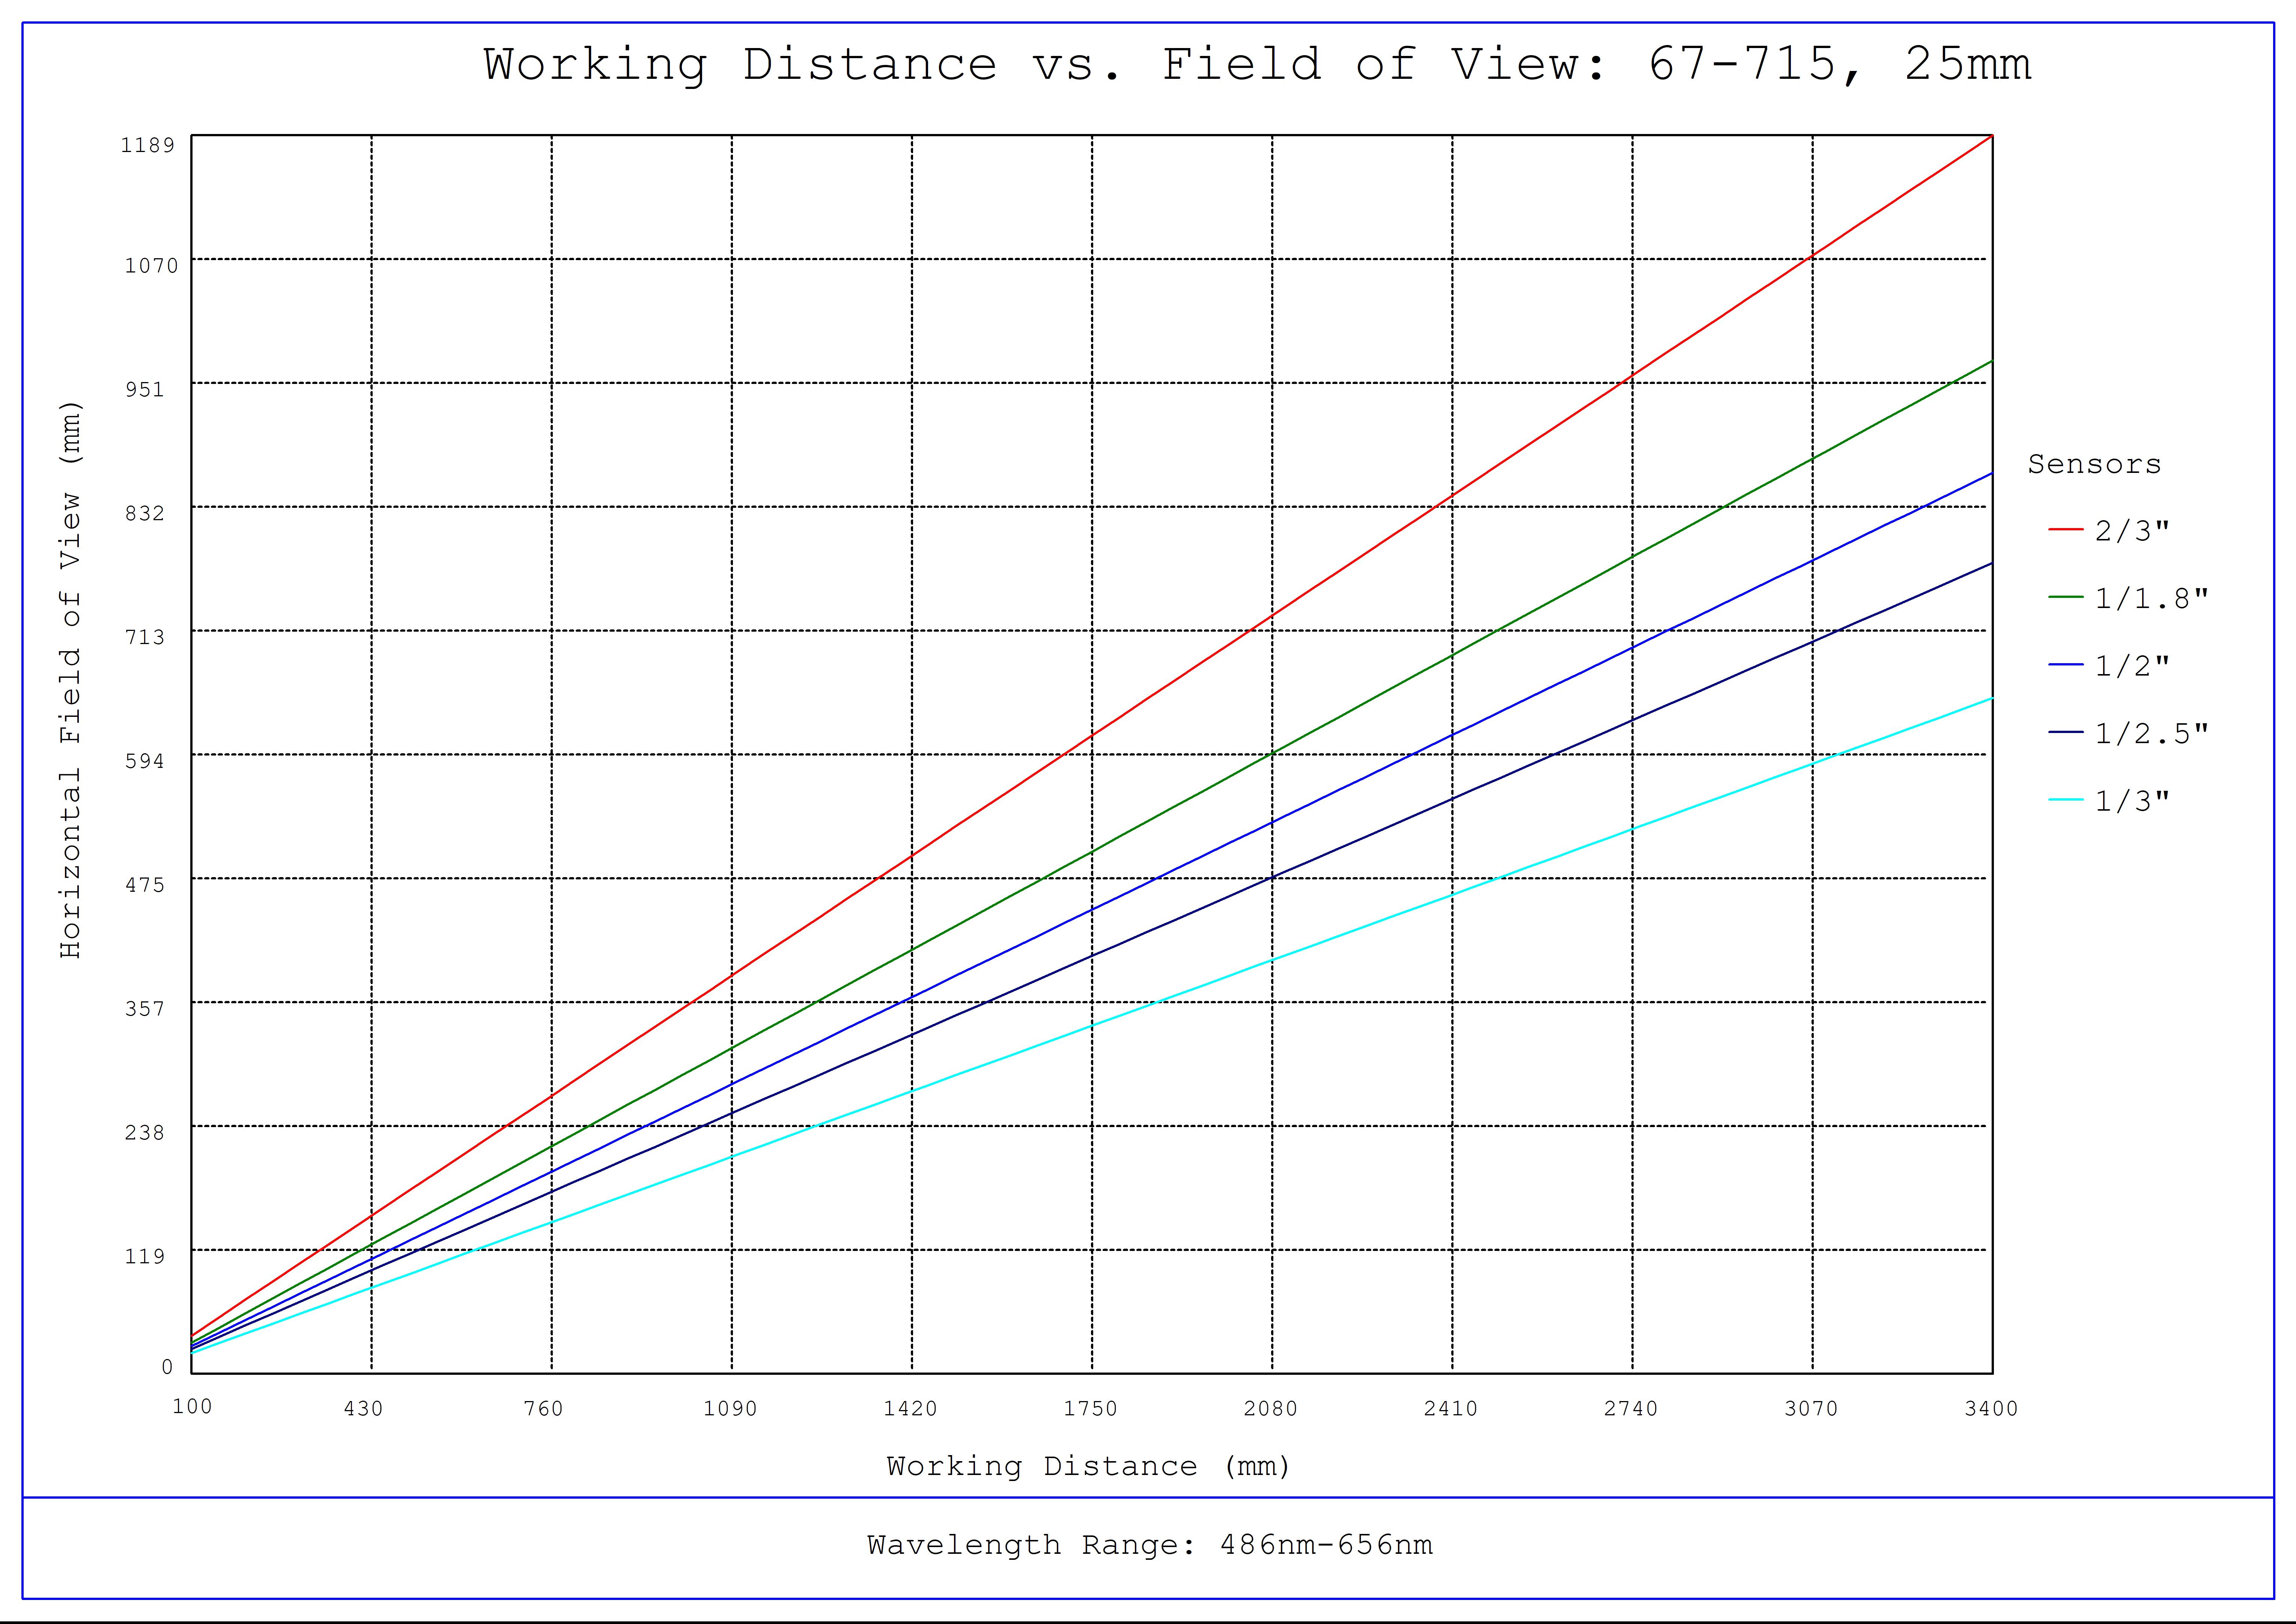 #67-715, 25mm C VIS-NIR Series Fixed Focal Length Lens, Working Distance versus Field of View Plot